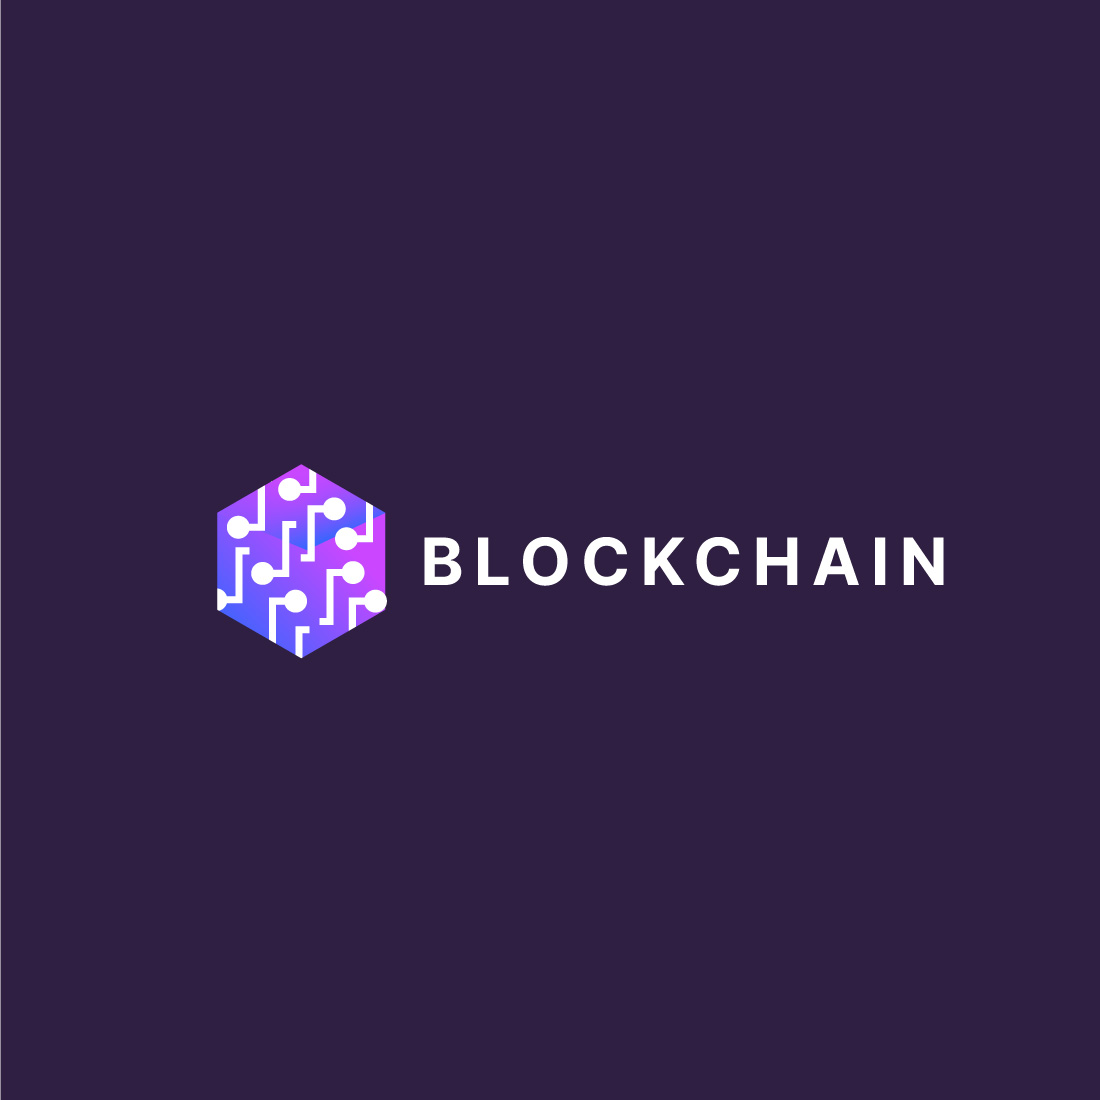 blockchain technology logo, block chain logo, crypto currency logo cover image.